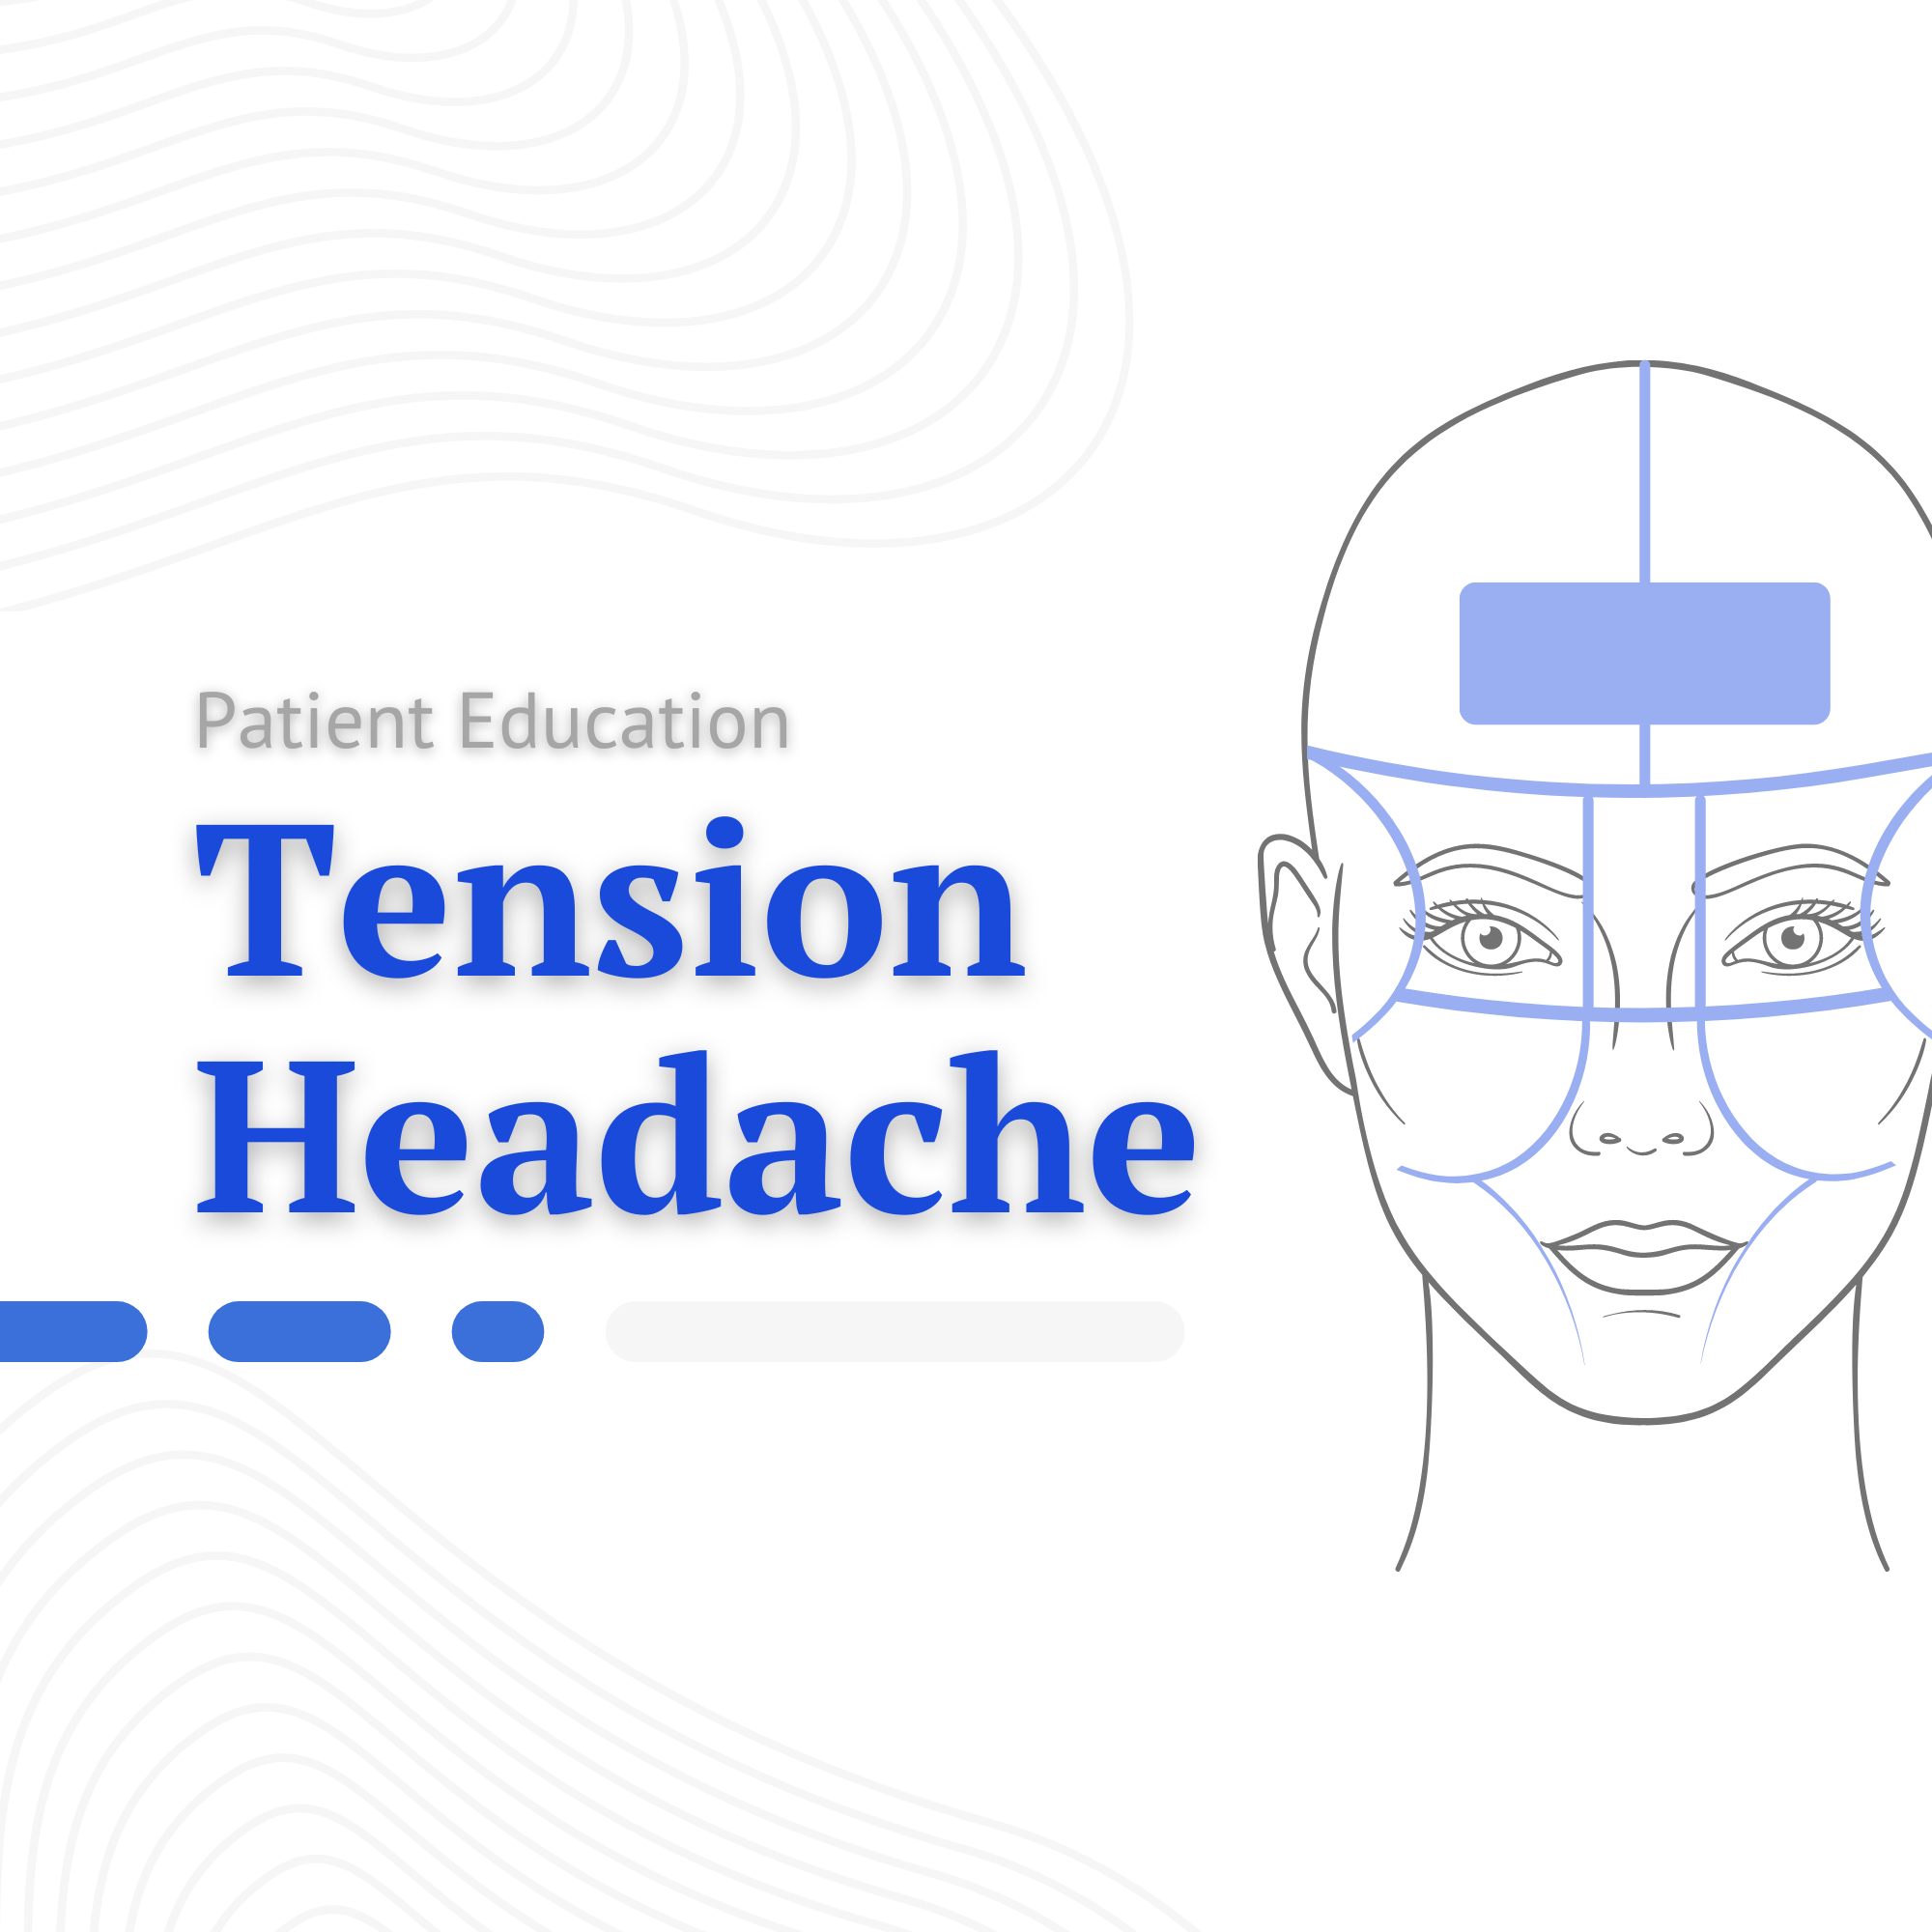 Tension-type headache (TTH)